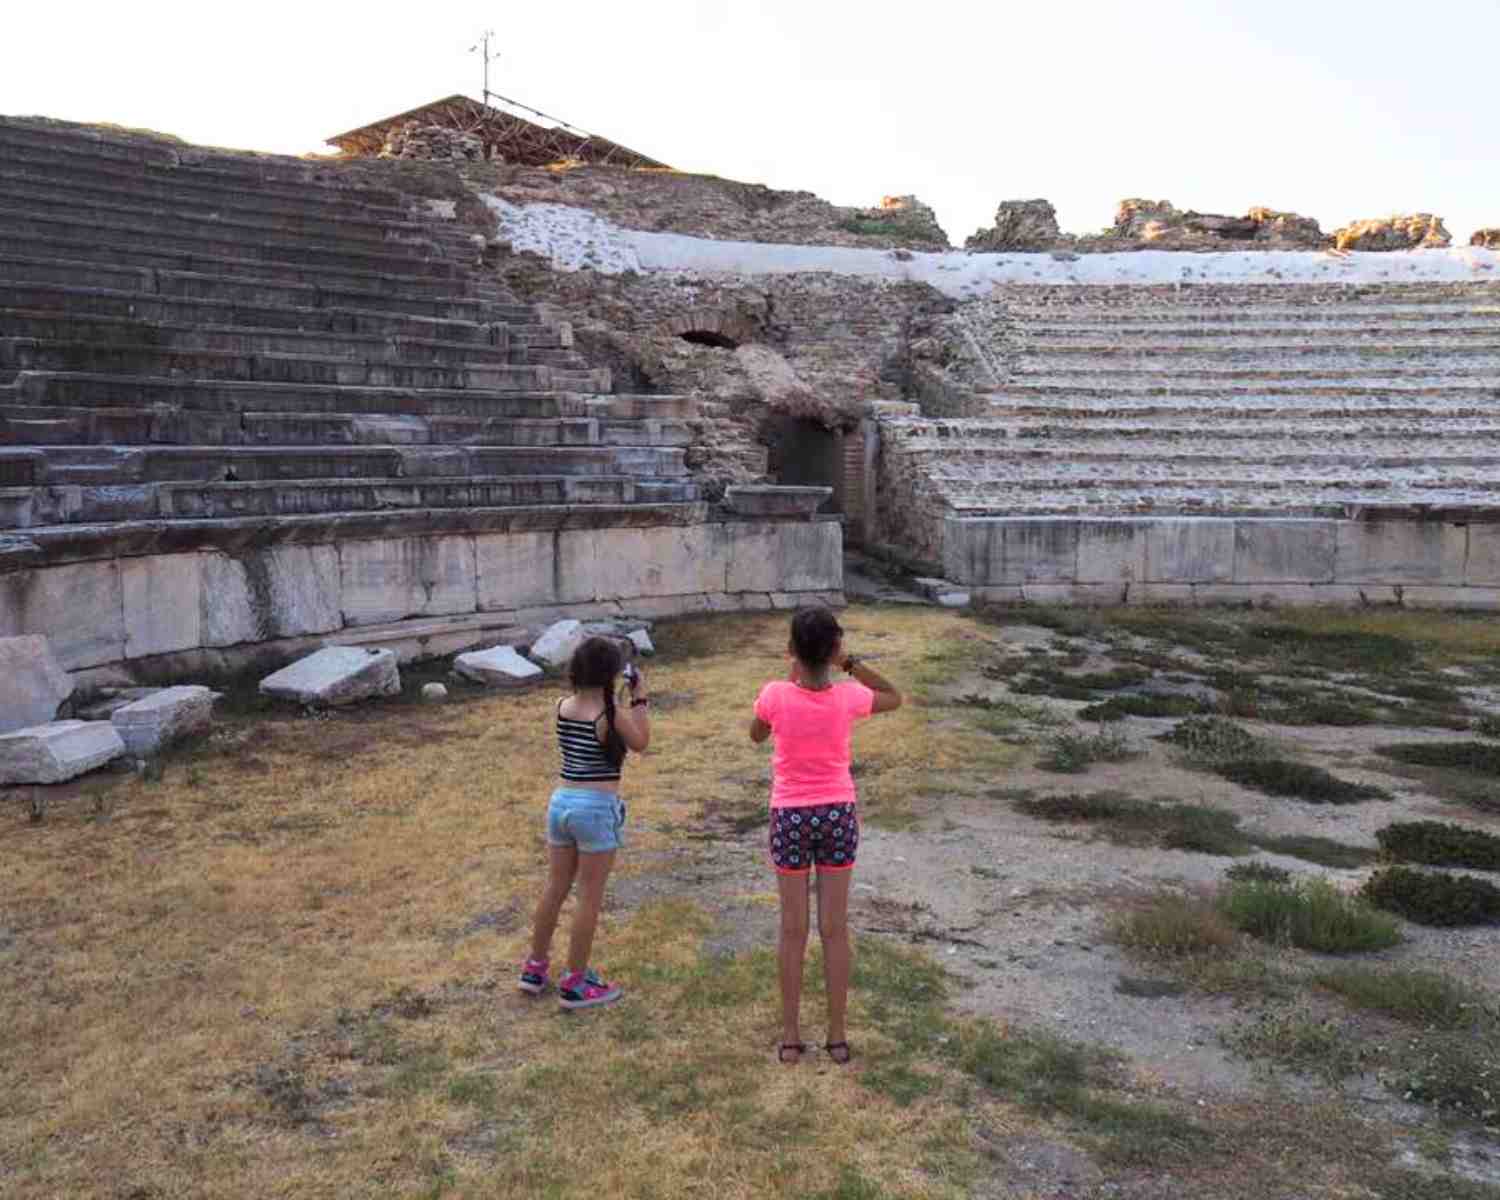 Exploring the Stobi ruins with kids in Macedonia